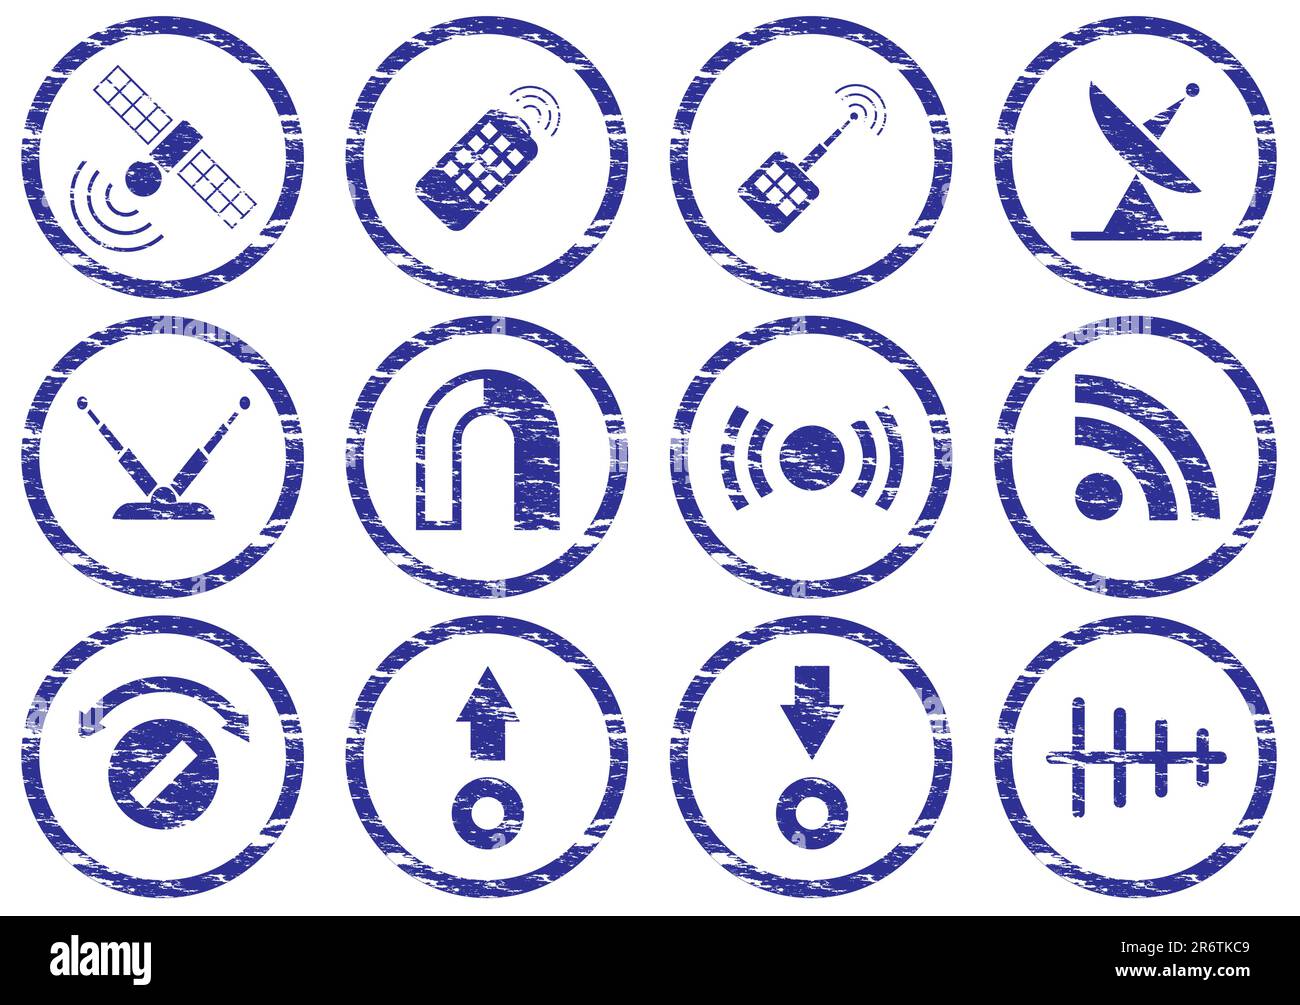 Gadget icons set. Grunge. White - dark blue palette. Vector illustration. Stock Vector